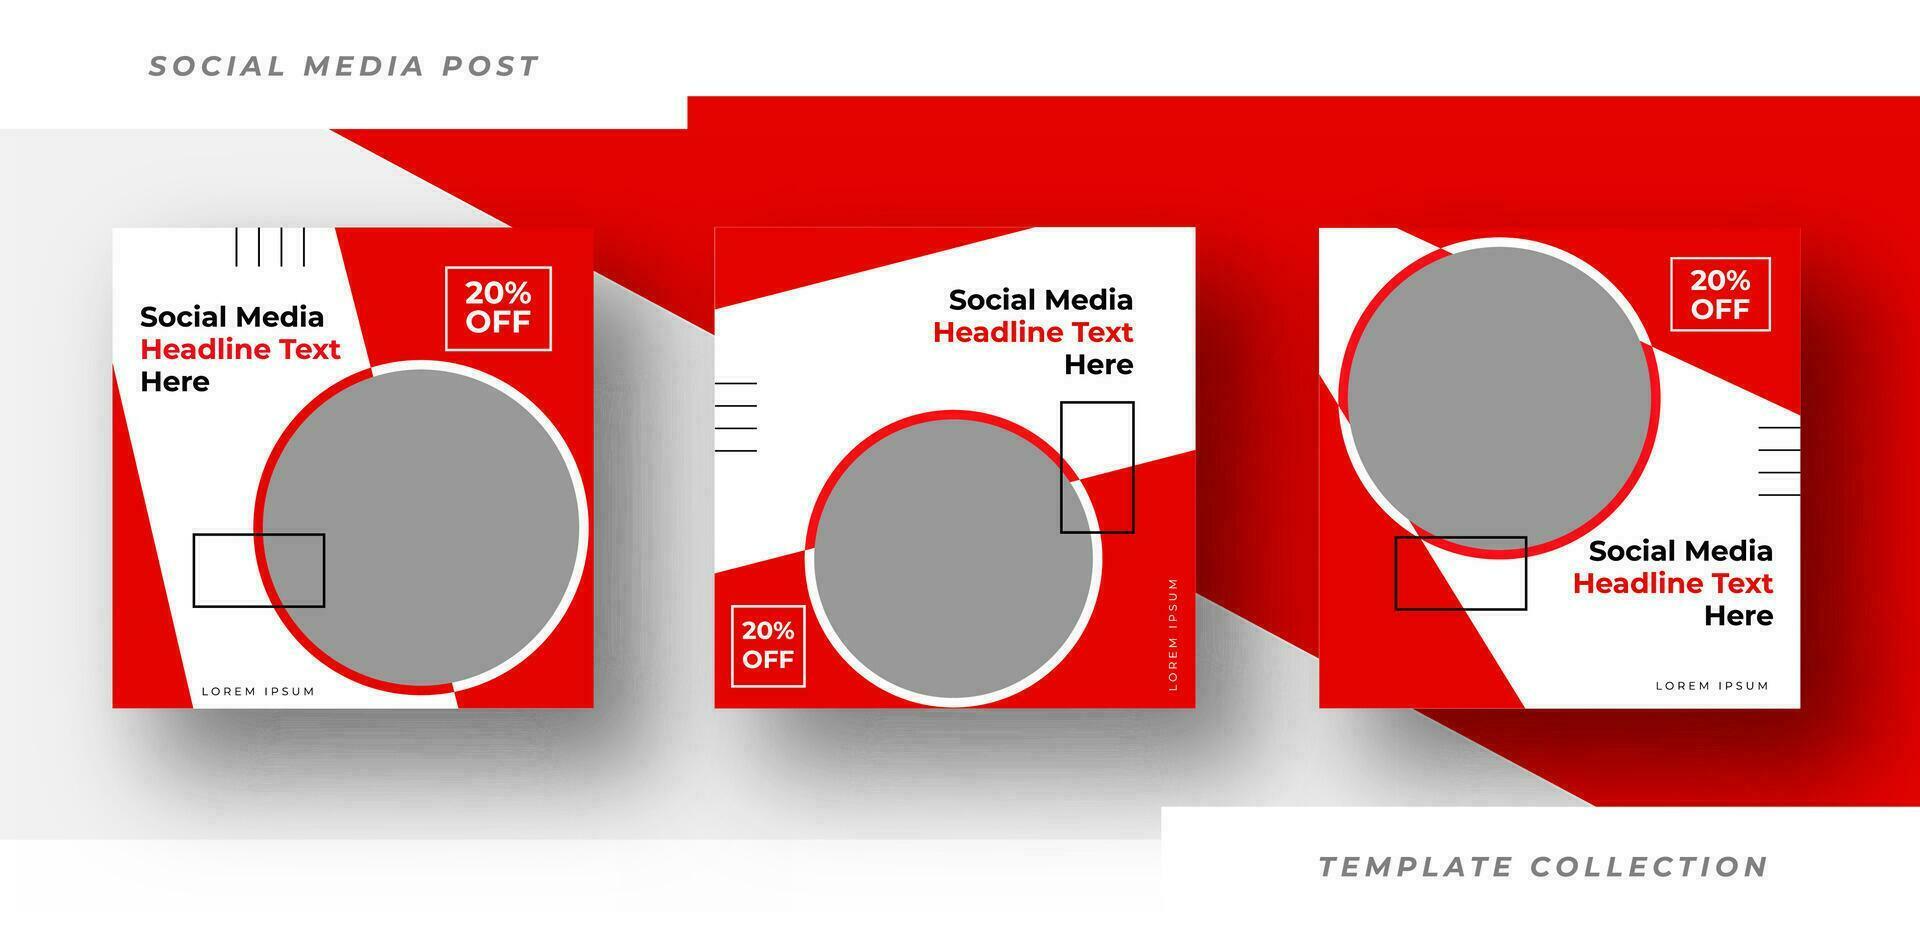 minimalista social medios de comunicación enviar titular texto aquí plantillas promoción bandera marco diseño Pro vector